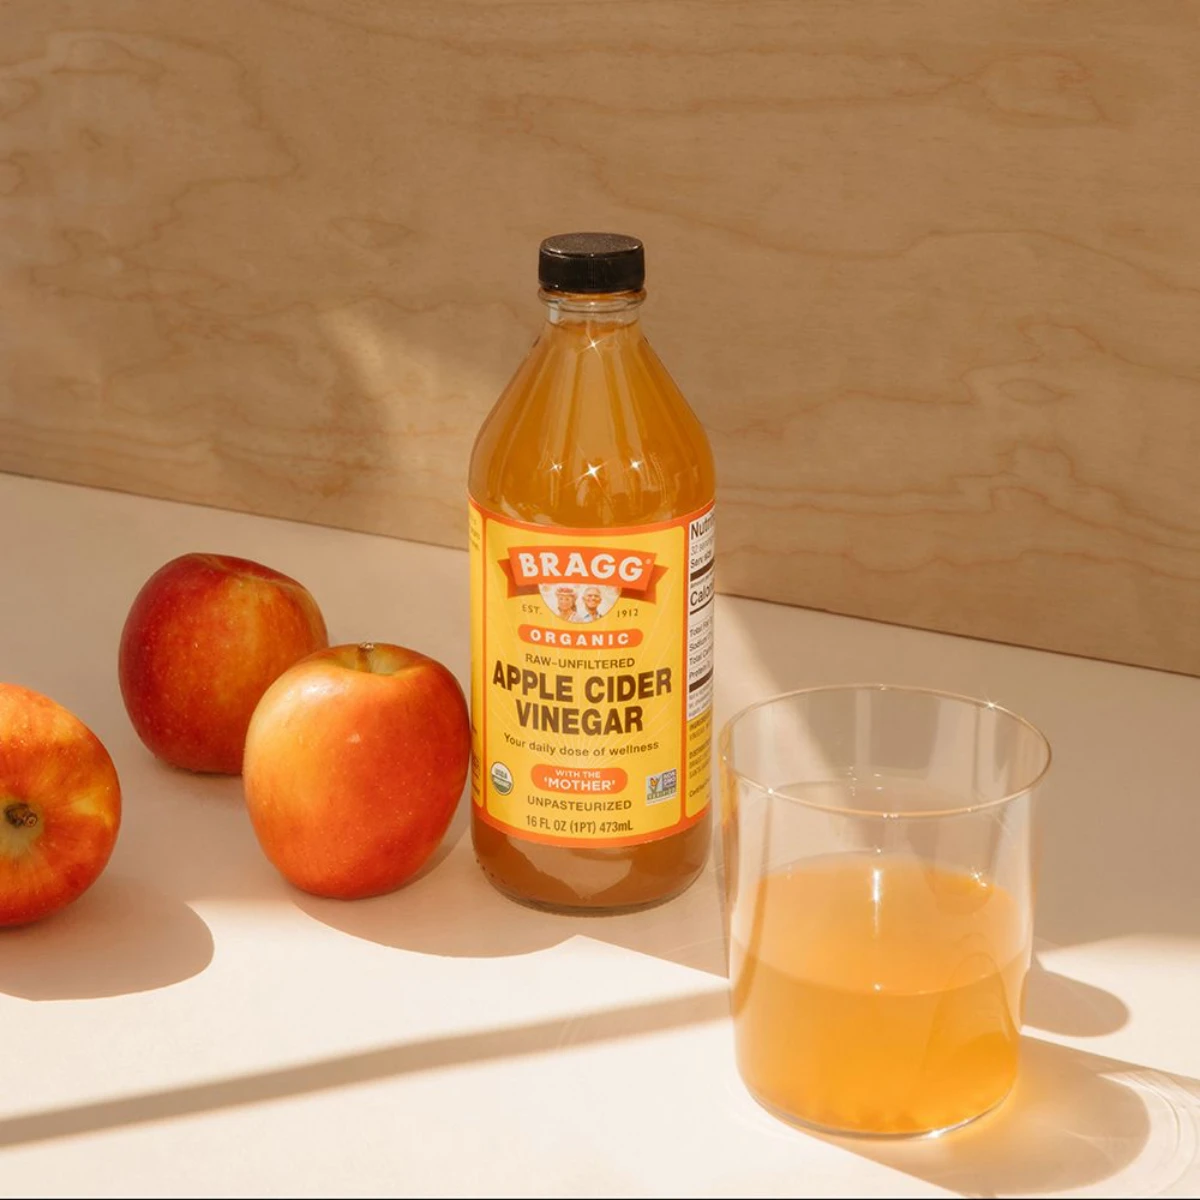 apple cider vinegar in a bottle and glass